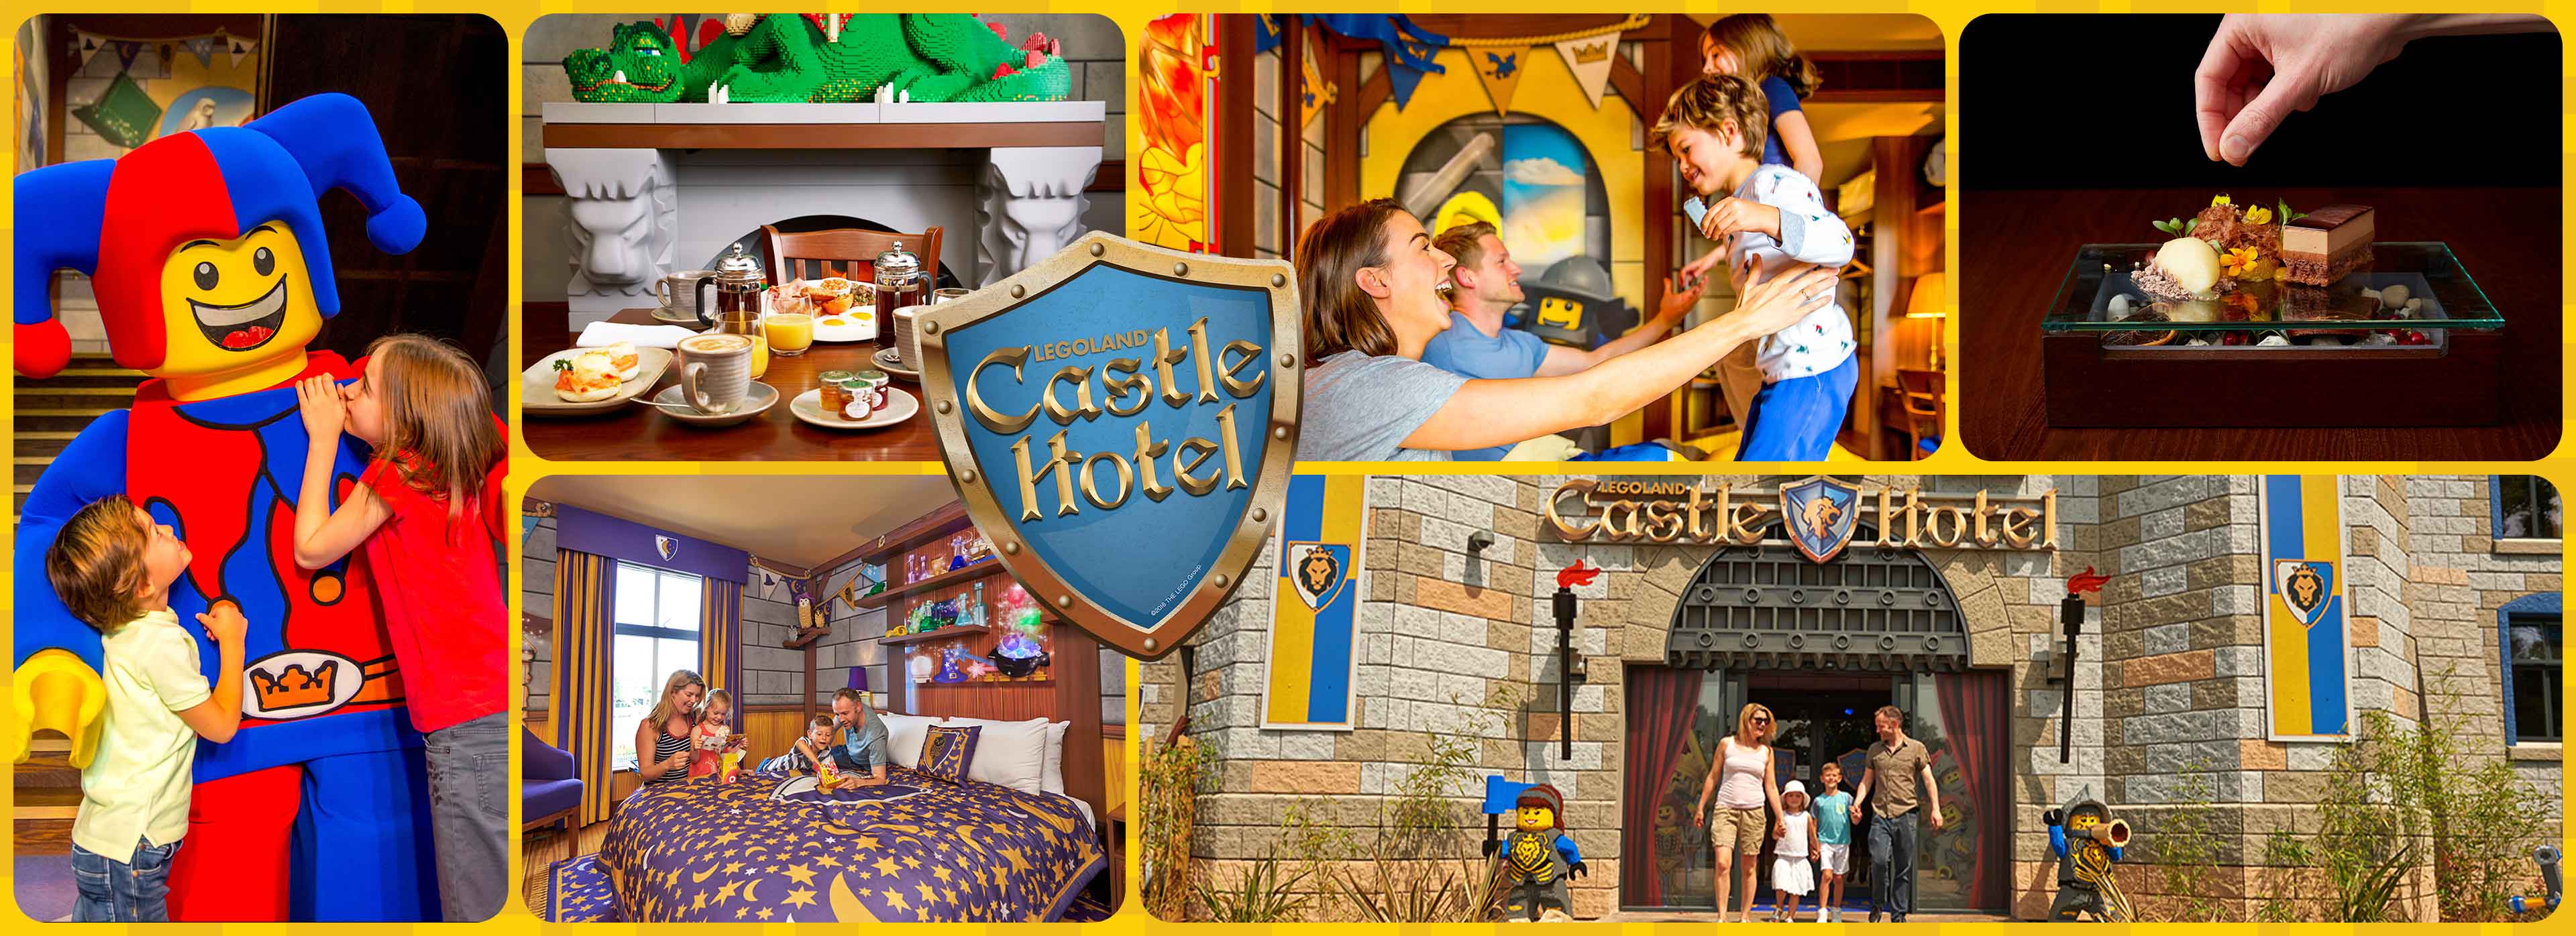 The LEGOLAND Castle Hotel at LEGOLAND Windsor Resort